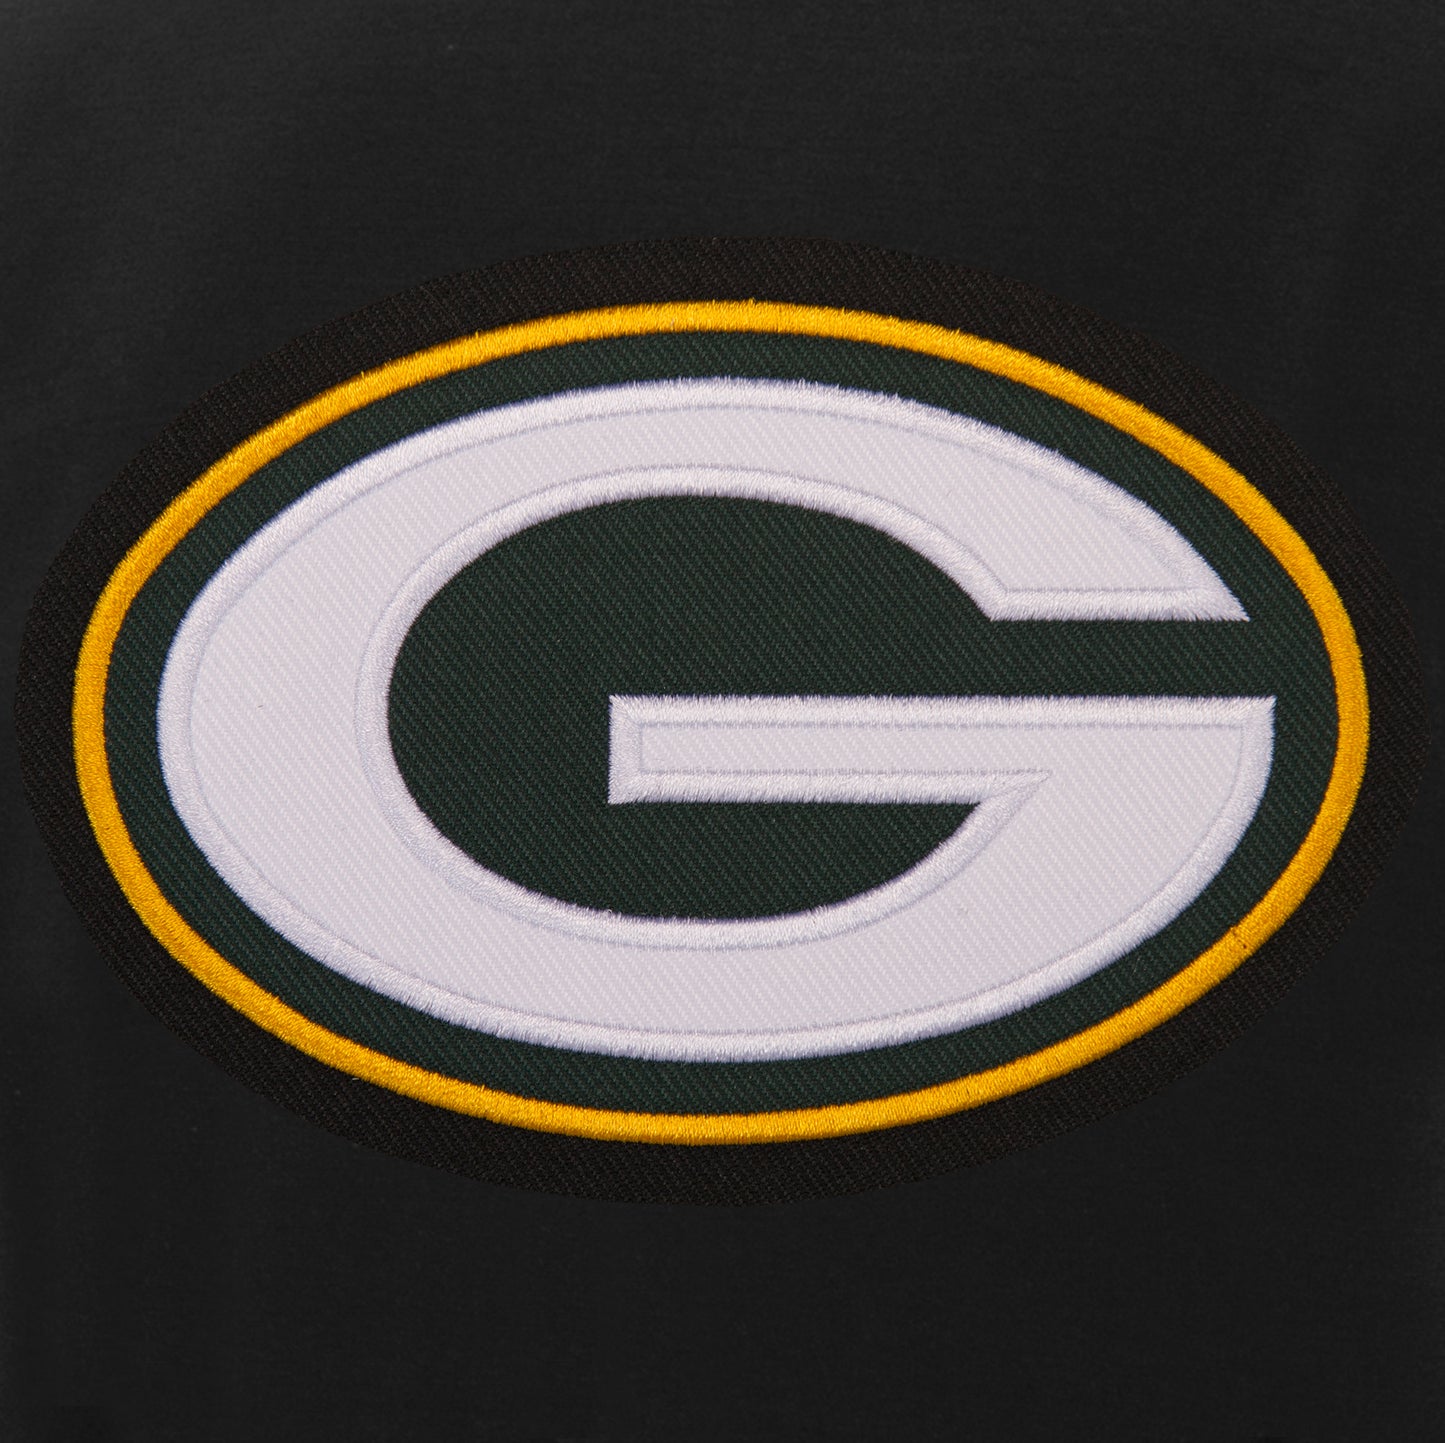 Green Bay Packers Reversible Varsity Jacket